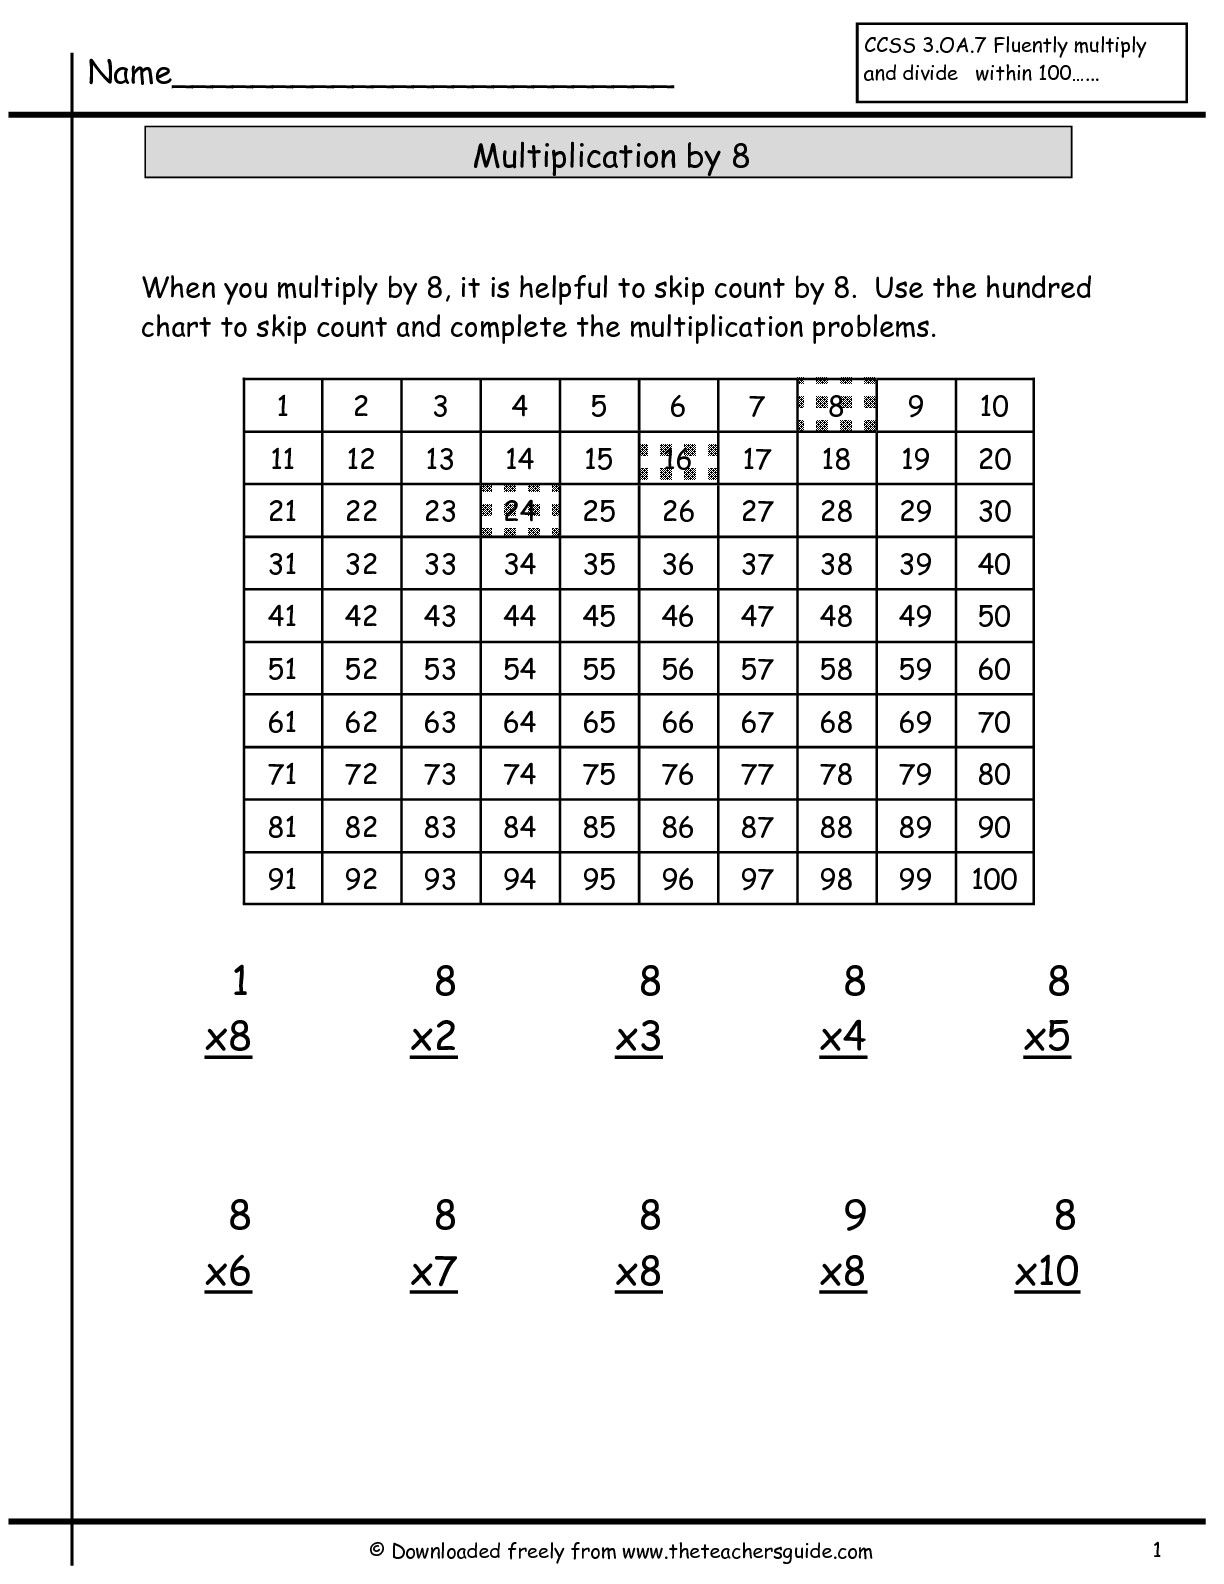 Multiplication0 And 1 Worksheet | Multiplication Facts for 0 Multiplication Worksheets Pdf